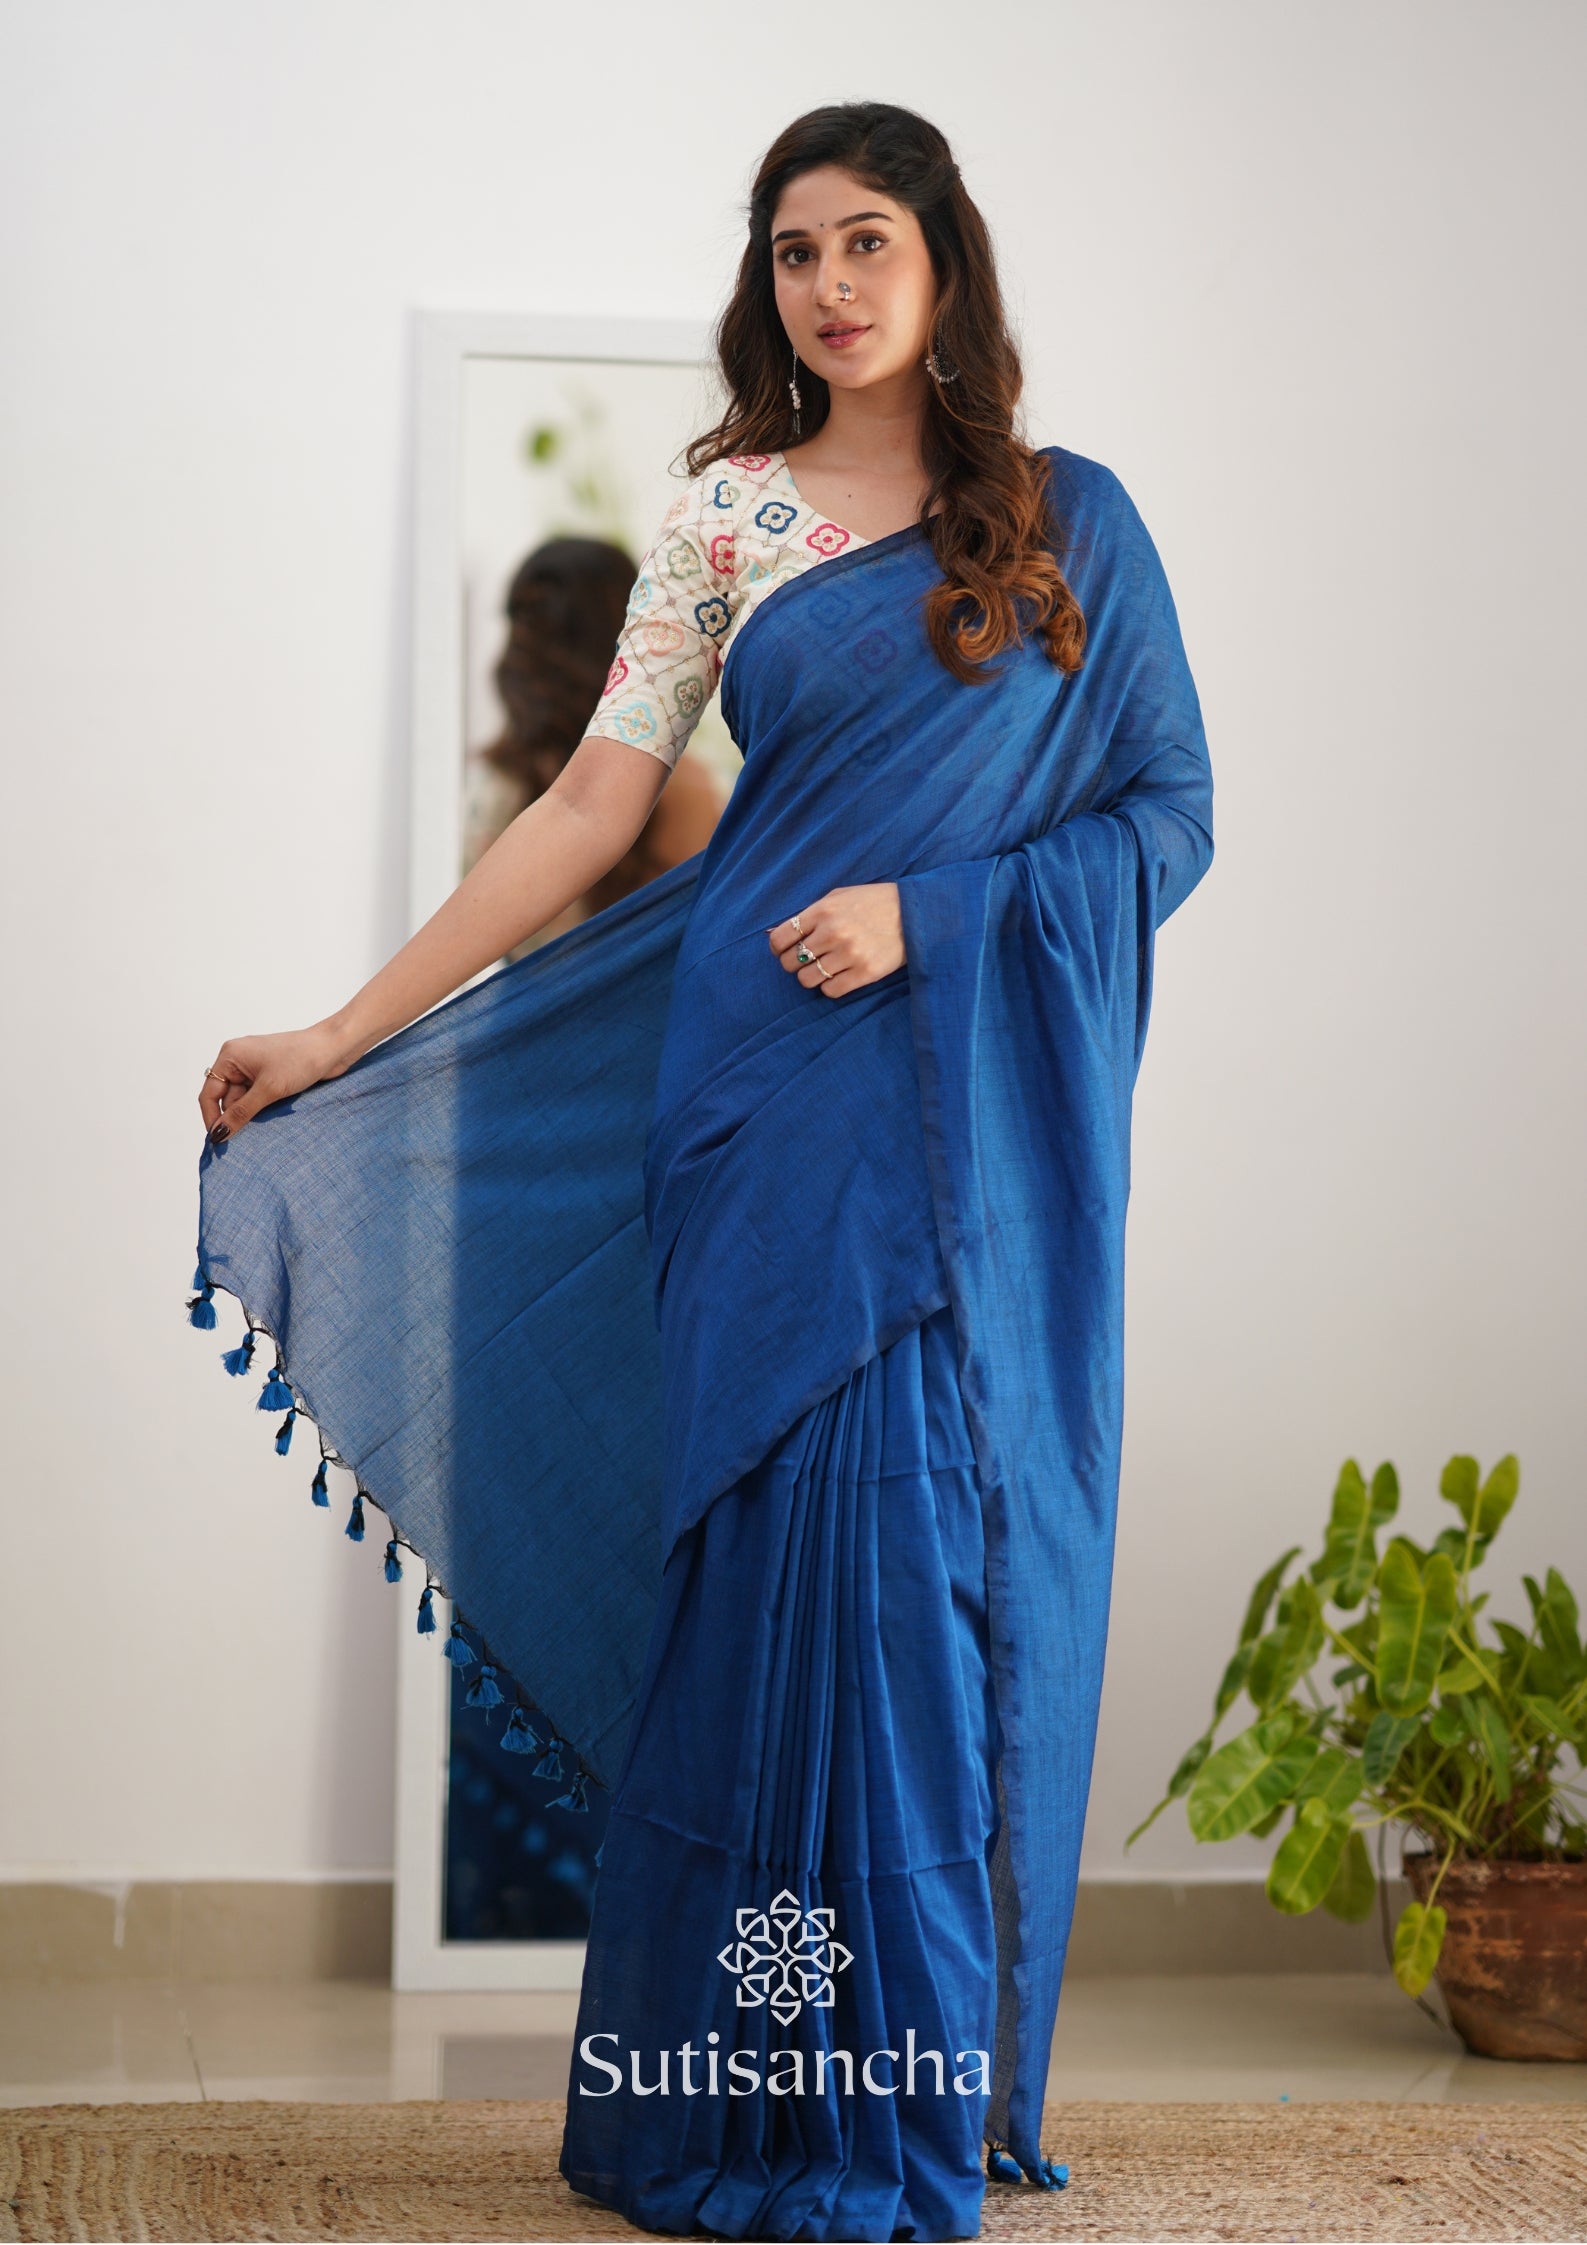 Sutisancha Indigoblue Handloom Cotton Saree with Designer Blouse